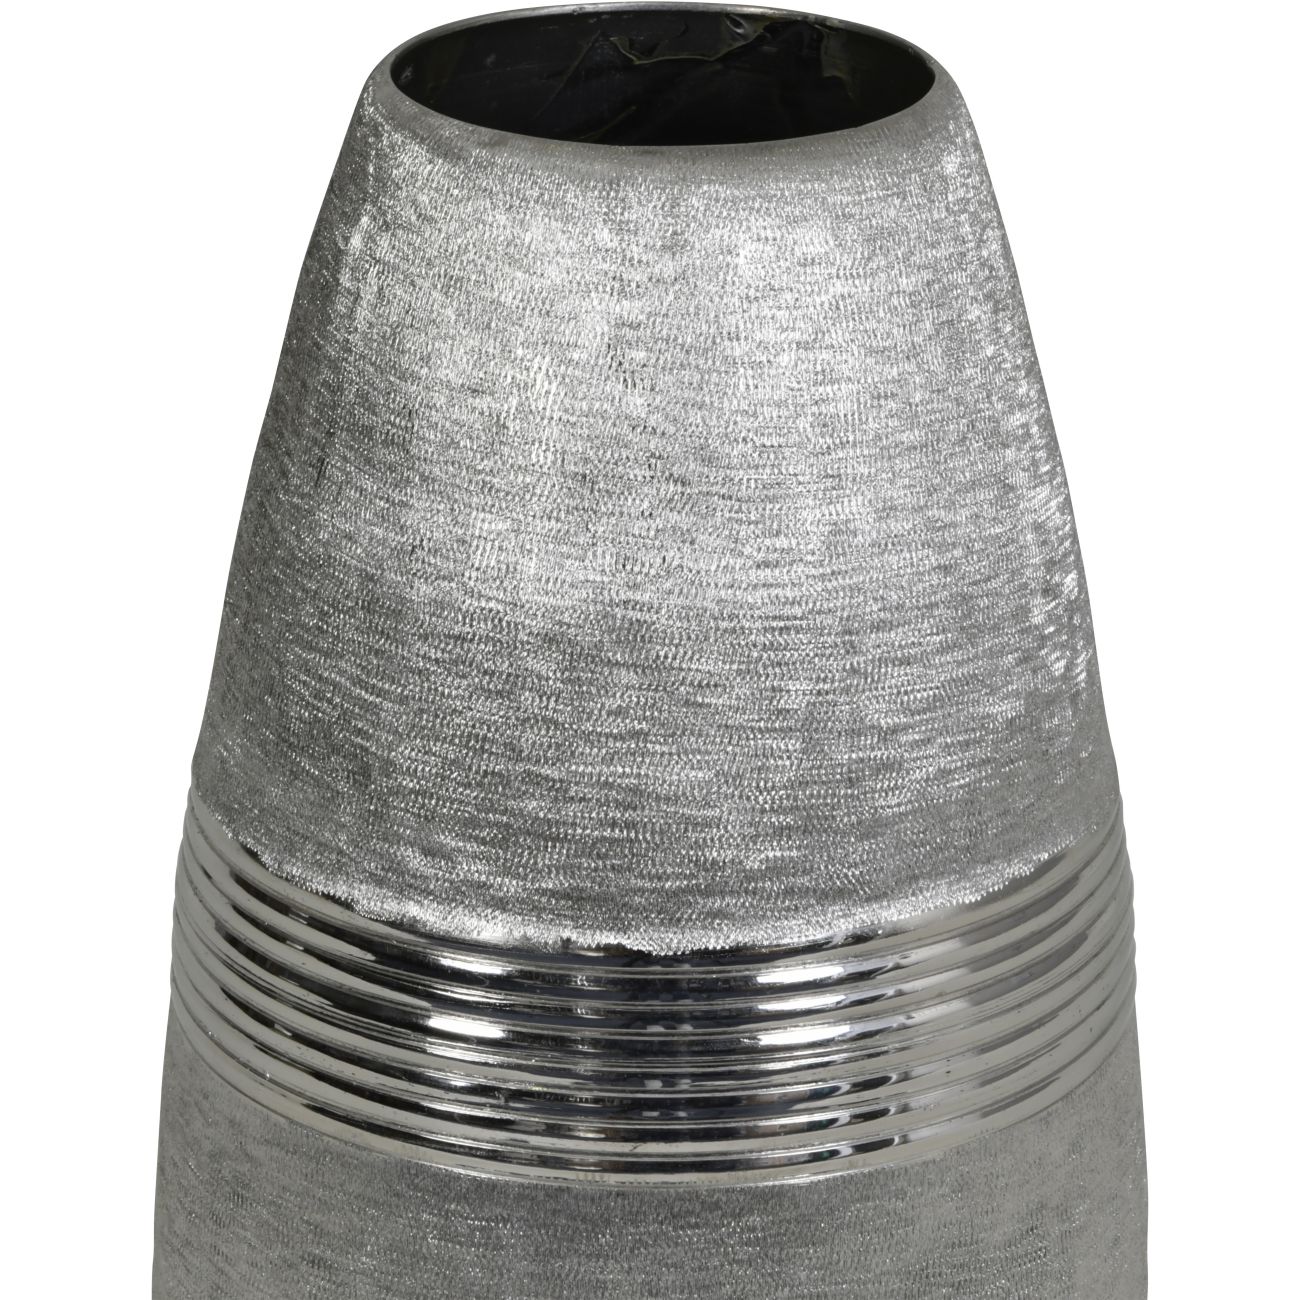 libra-broxton-rings-burnished-silver-metal-convex-vase-close